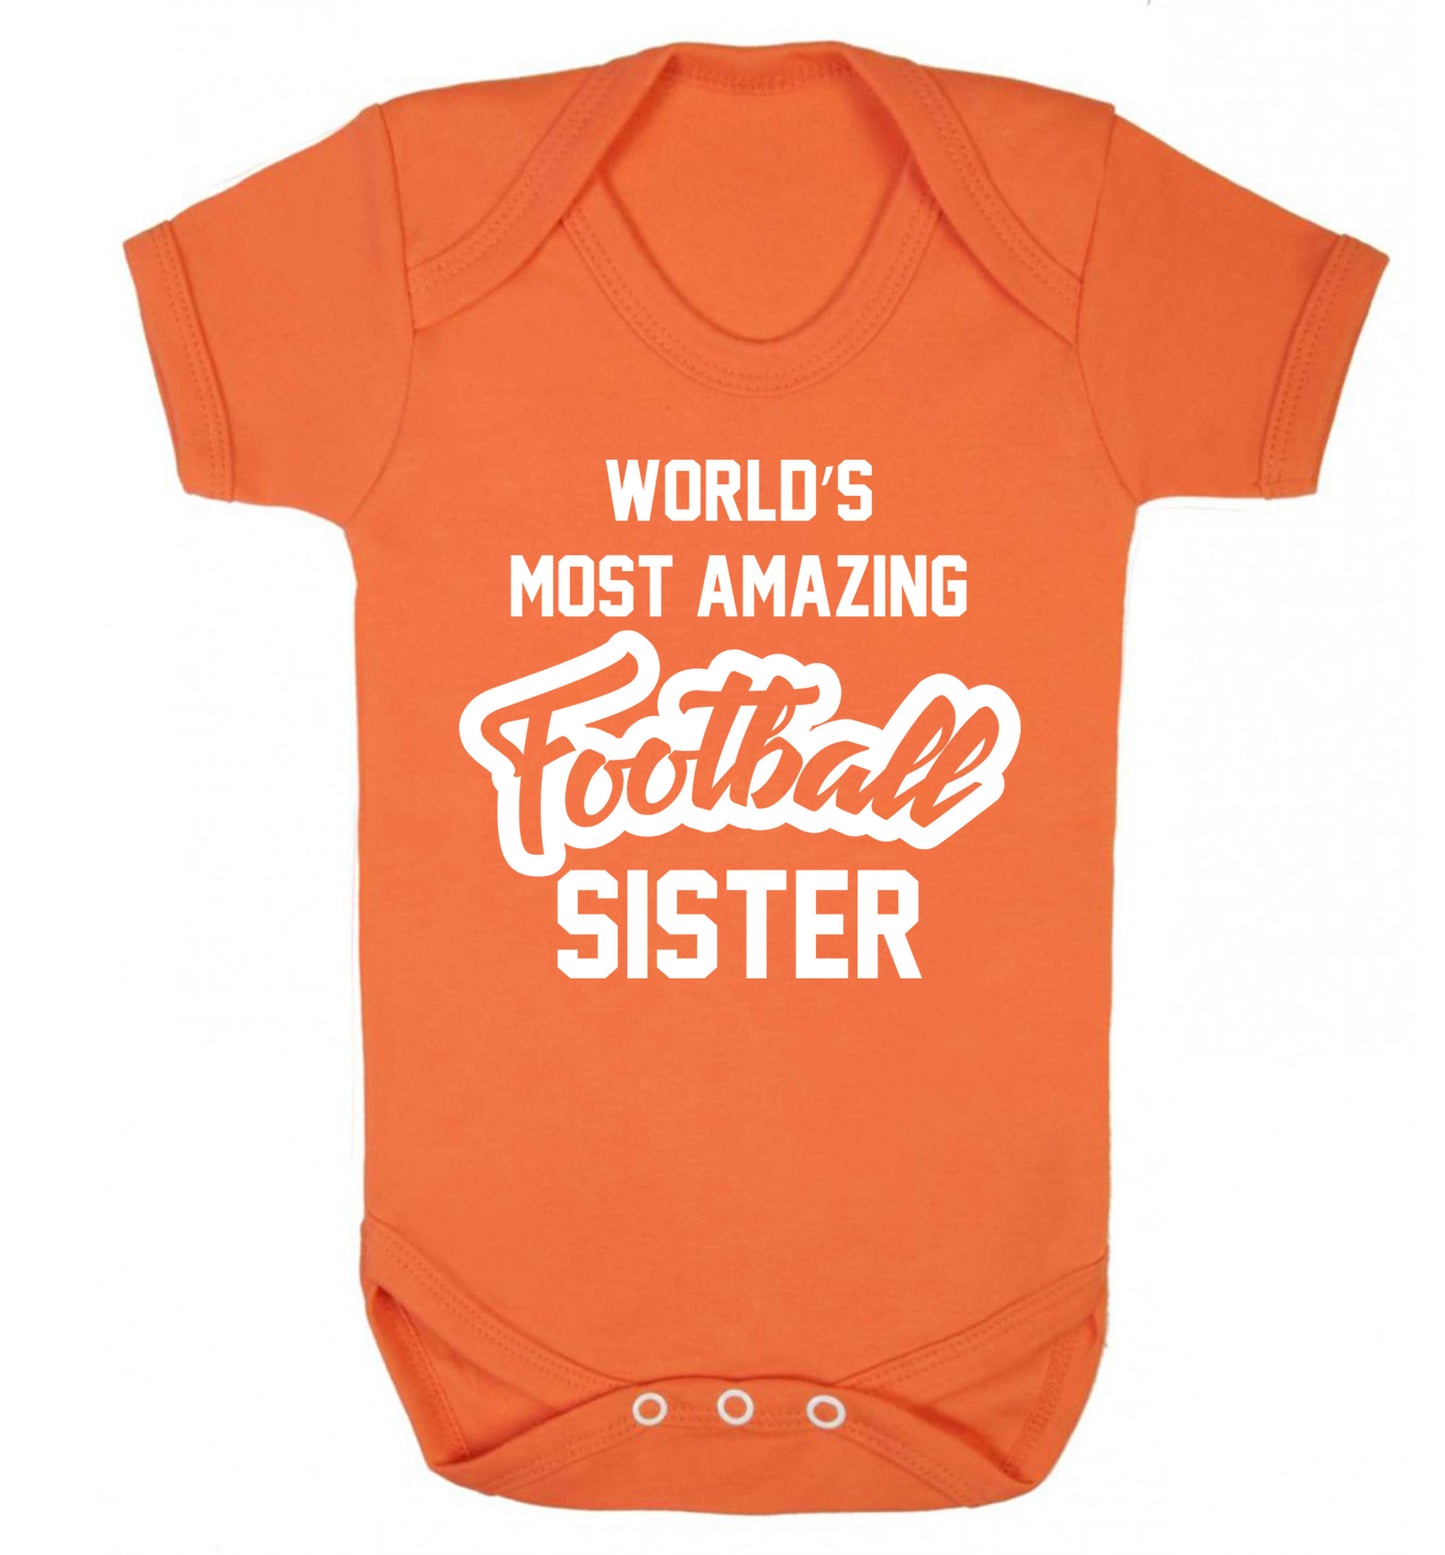 Worlds most amazing football sister Baby Vest orange 18-24 months